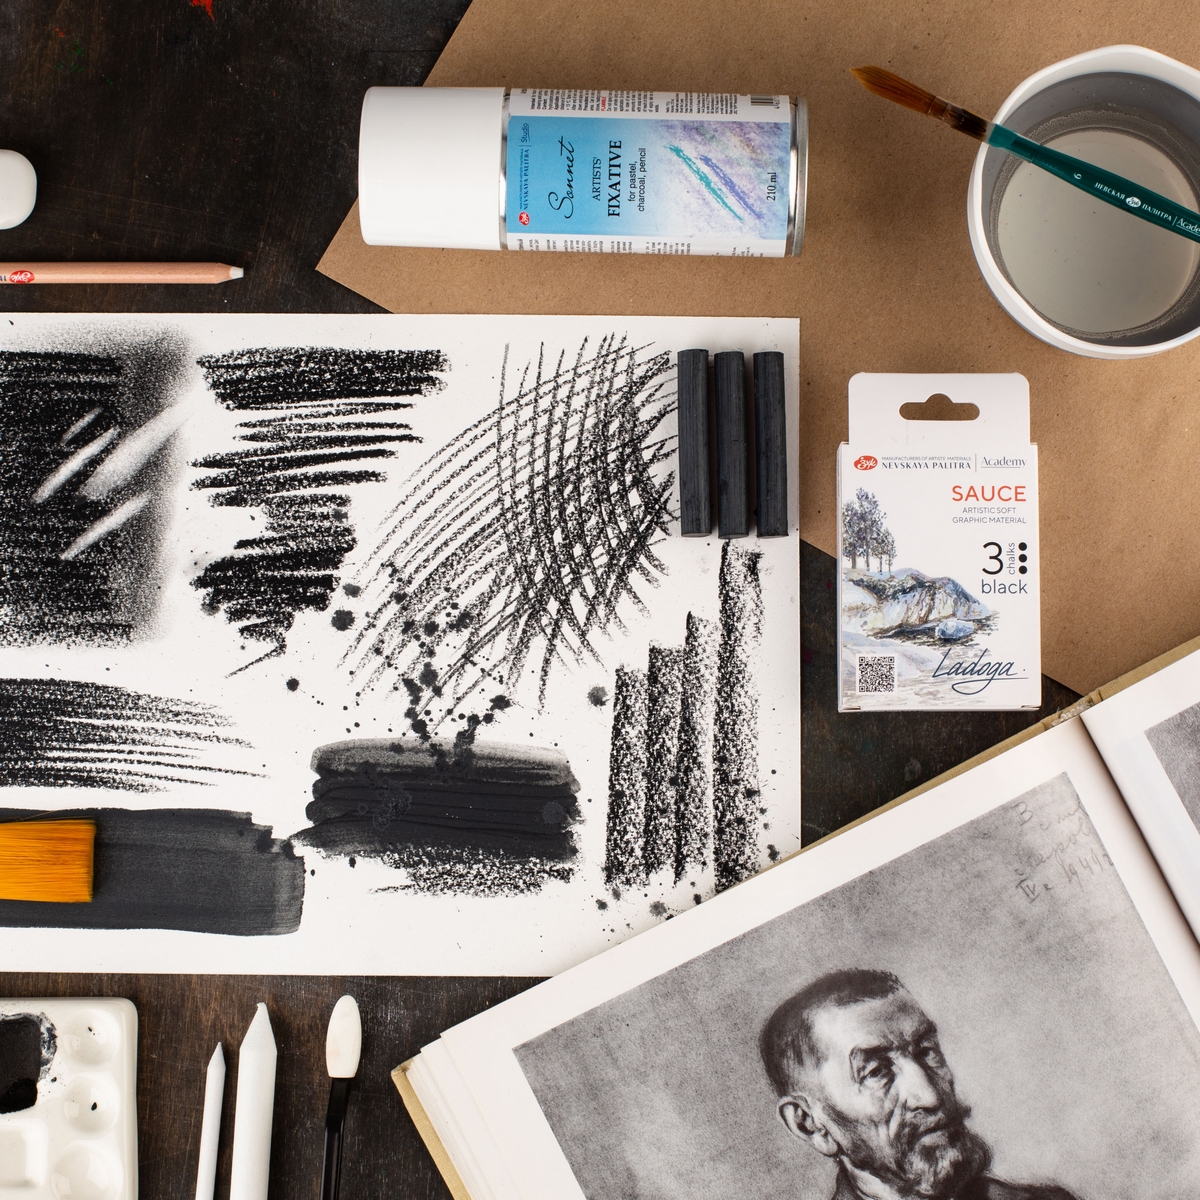 Artists' graphic materials set Ladoga,  black sauce, 3 chalk, carton box